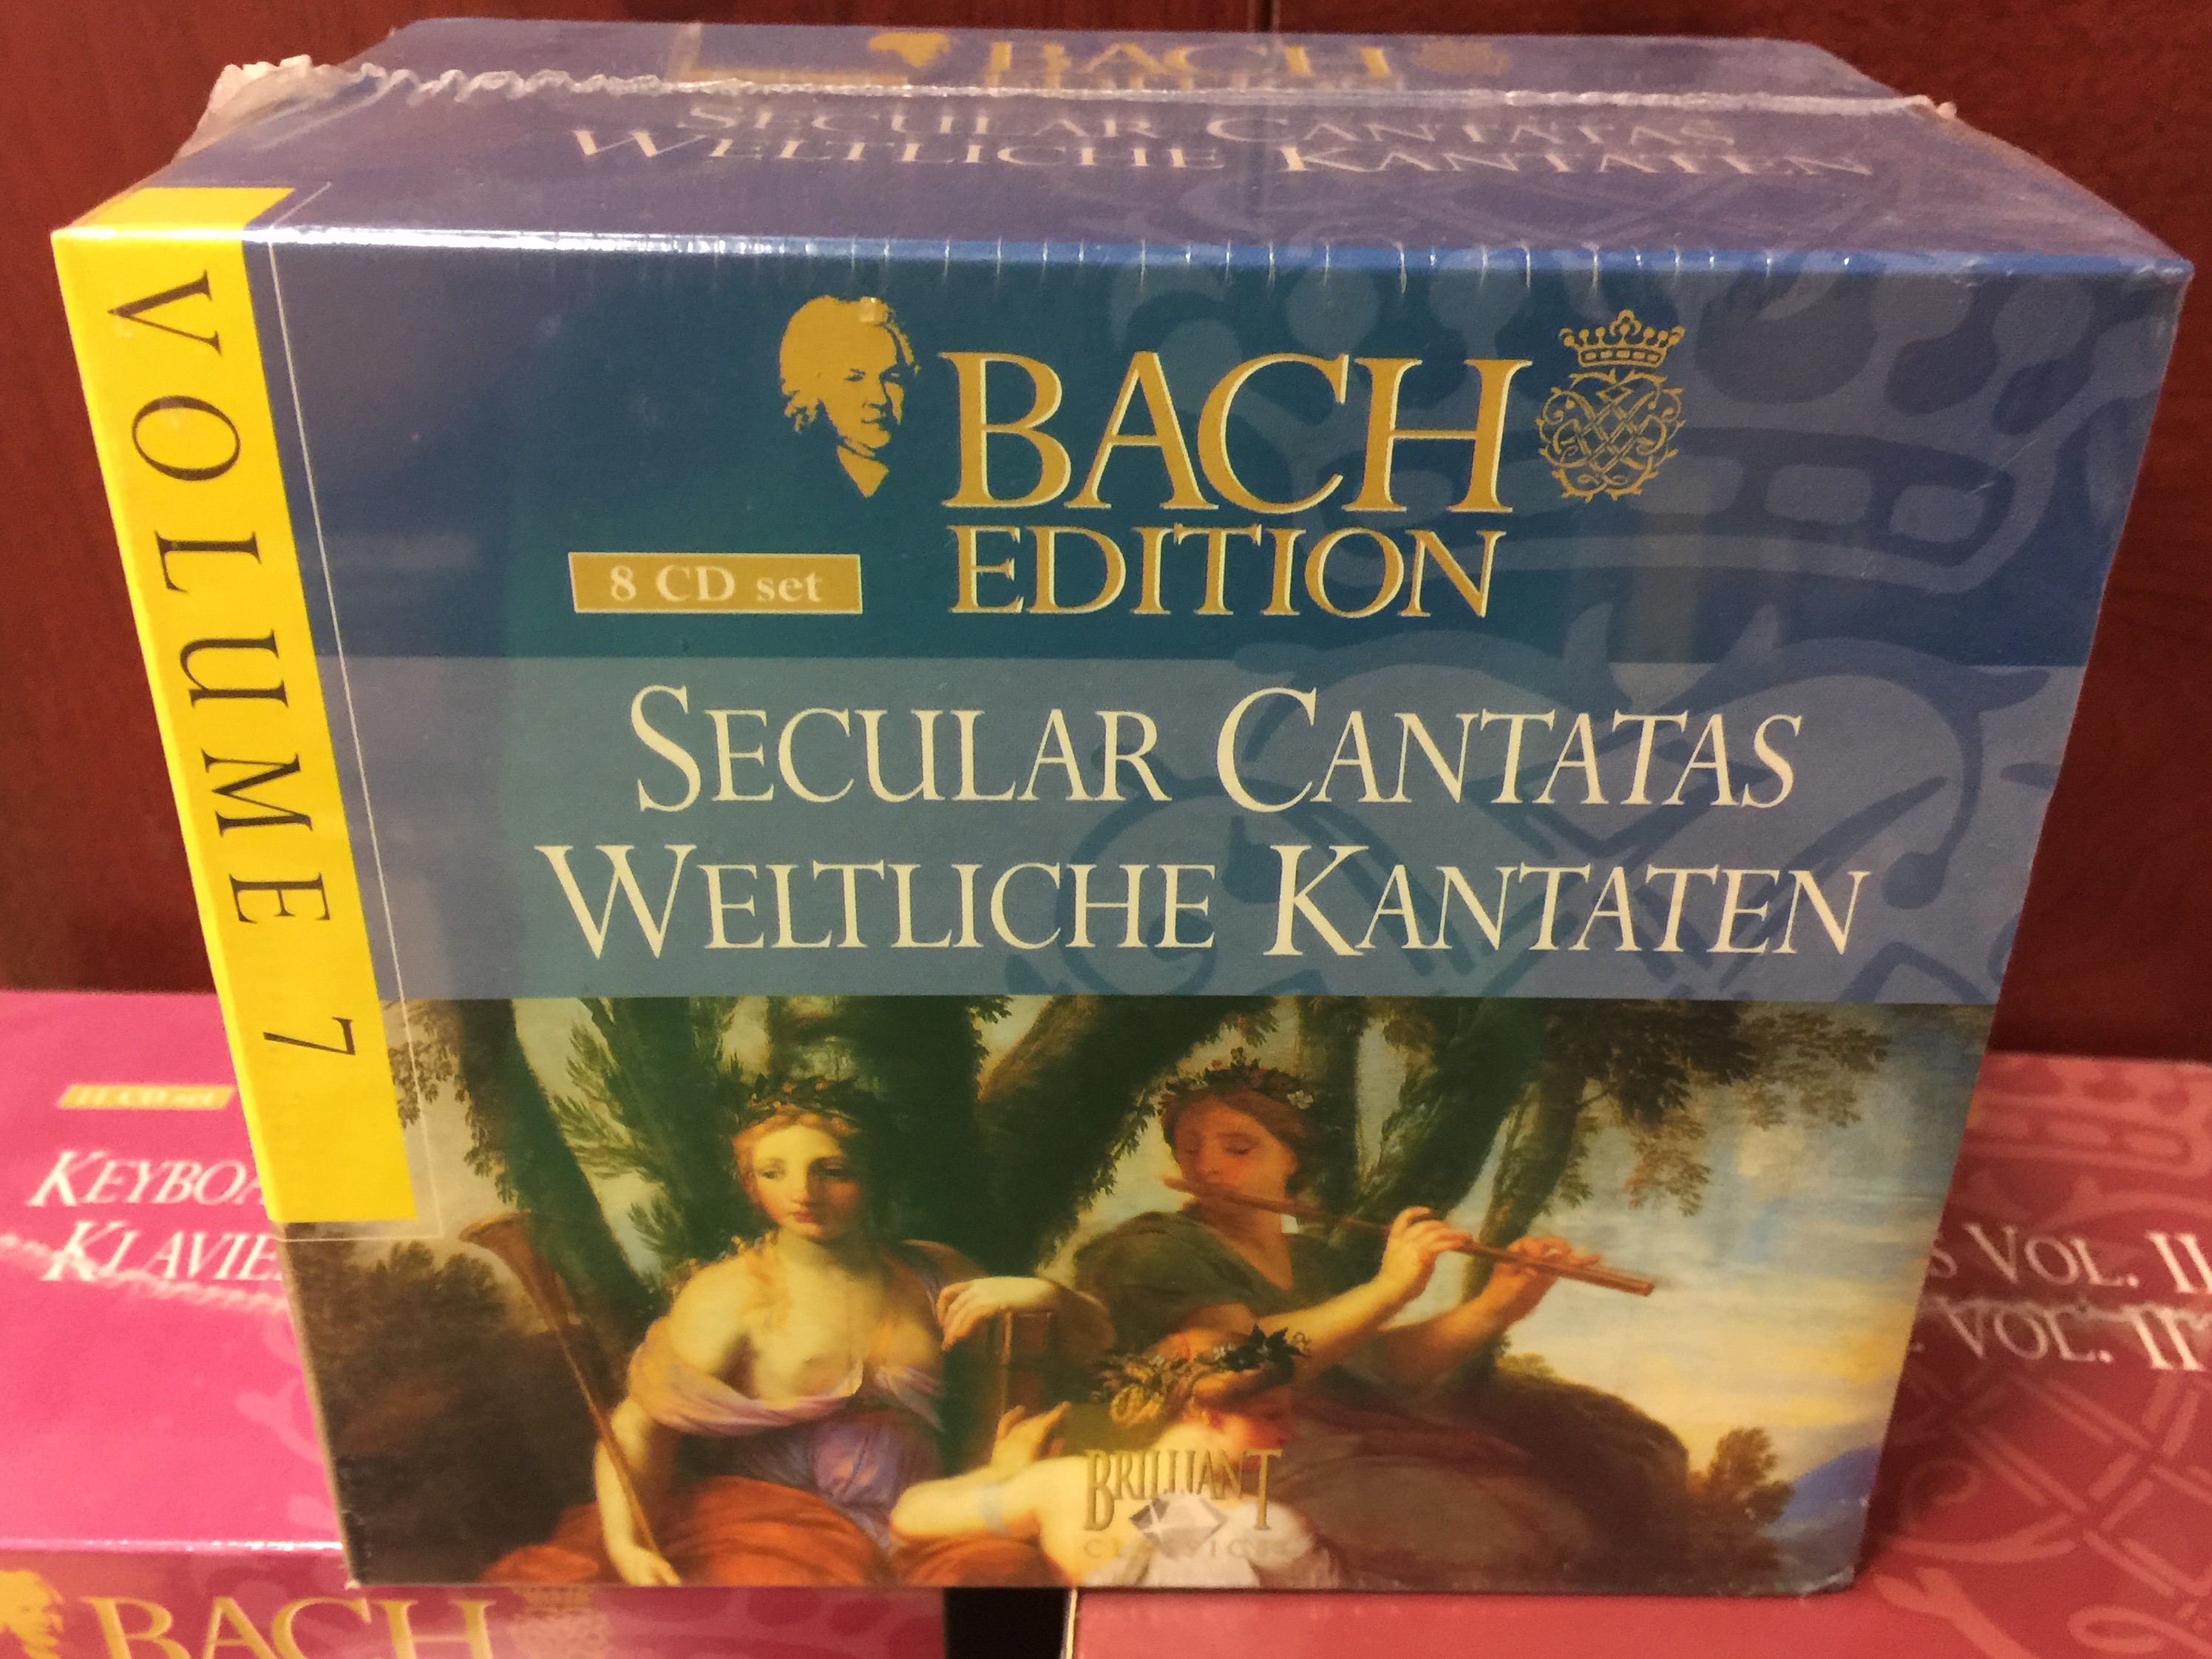 bach-edition-volume-7-secular-cantatas-weltliche-kantaten-brilliant-classics-8x-audio-cd-box-set-99366-1-.jpg